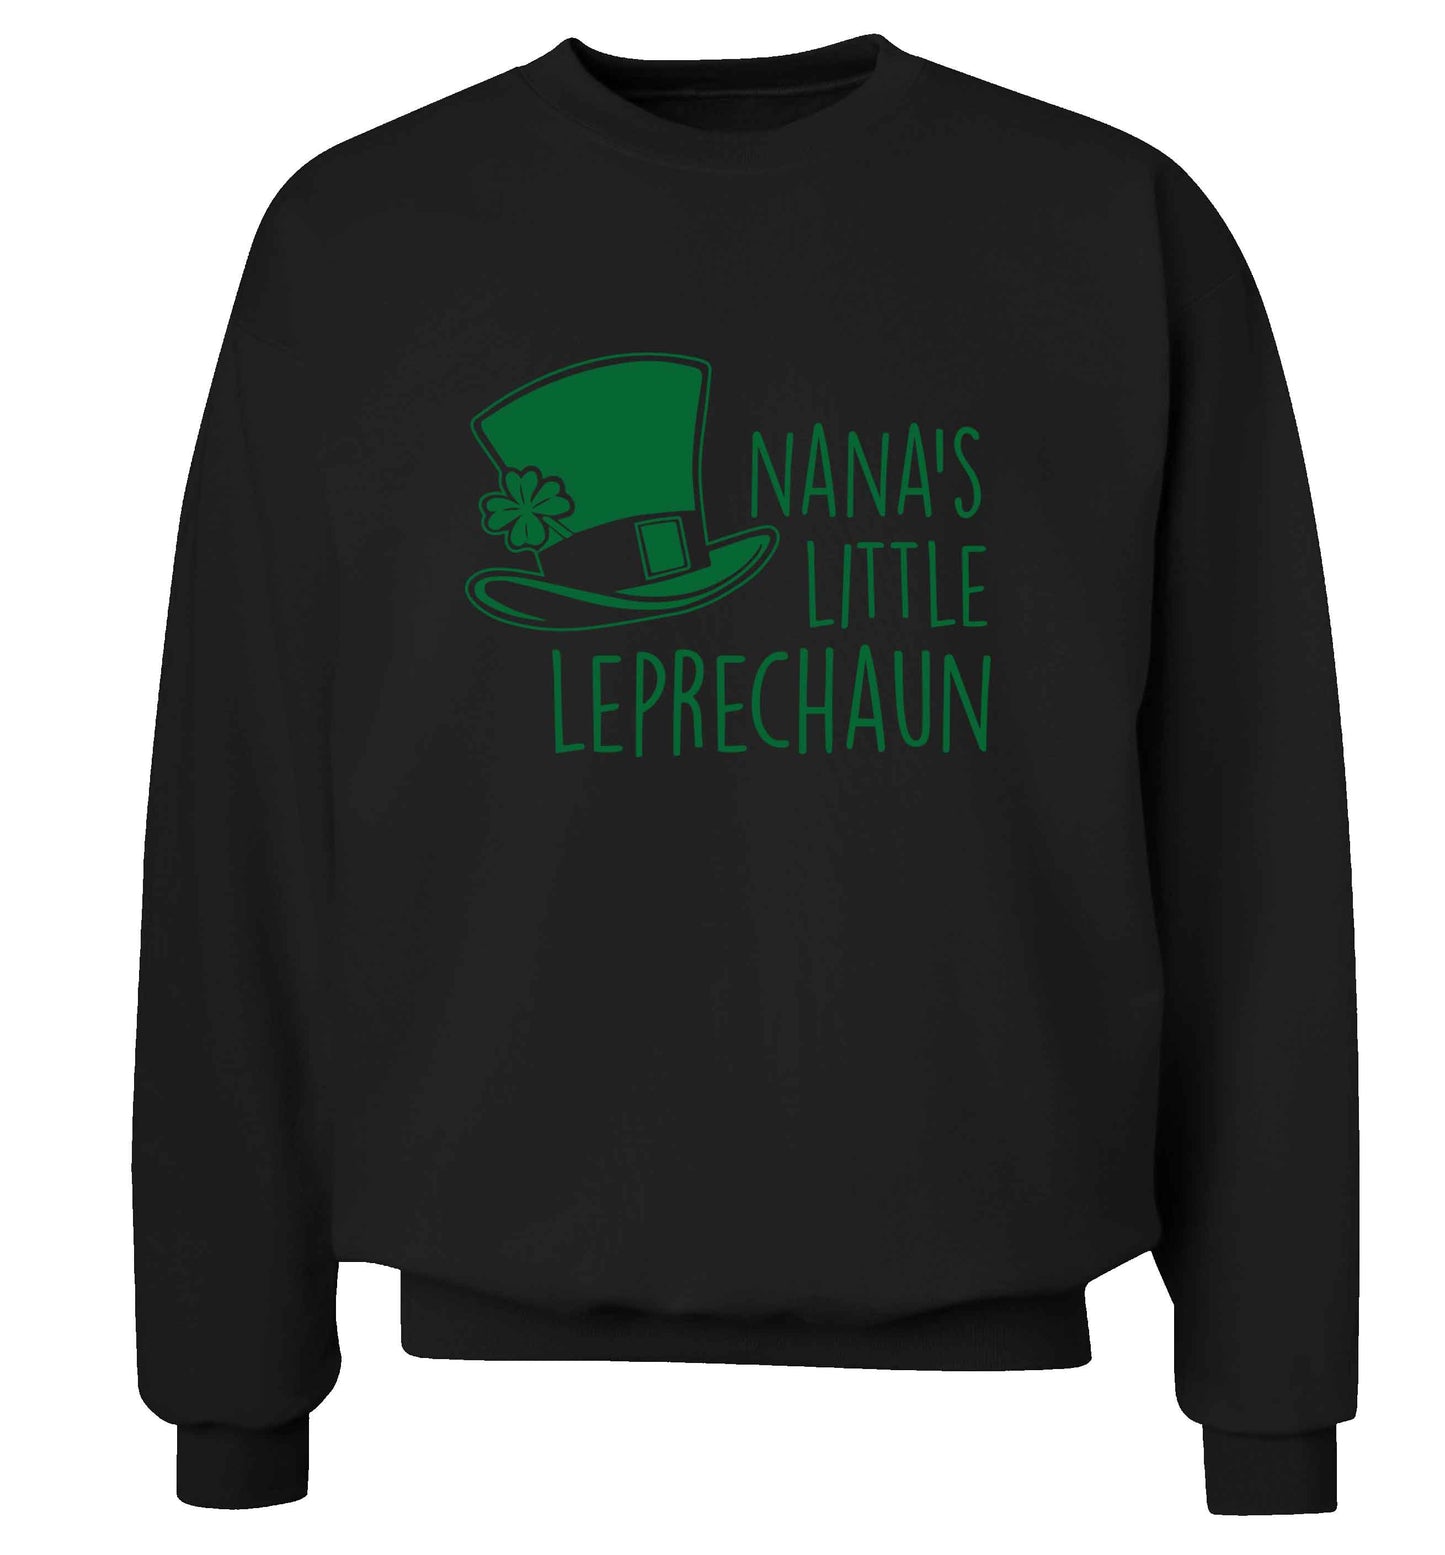 Nana's little leprechaun adult's unisex black sweater 2XL